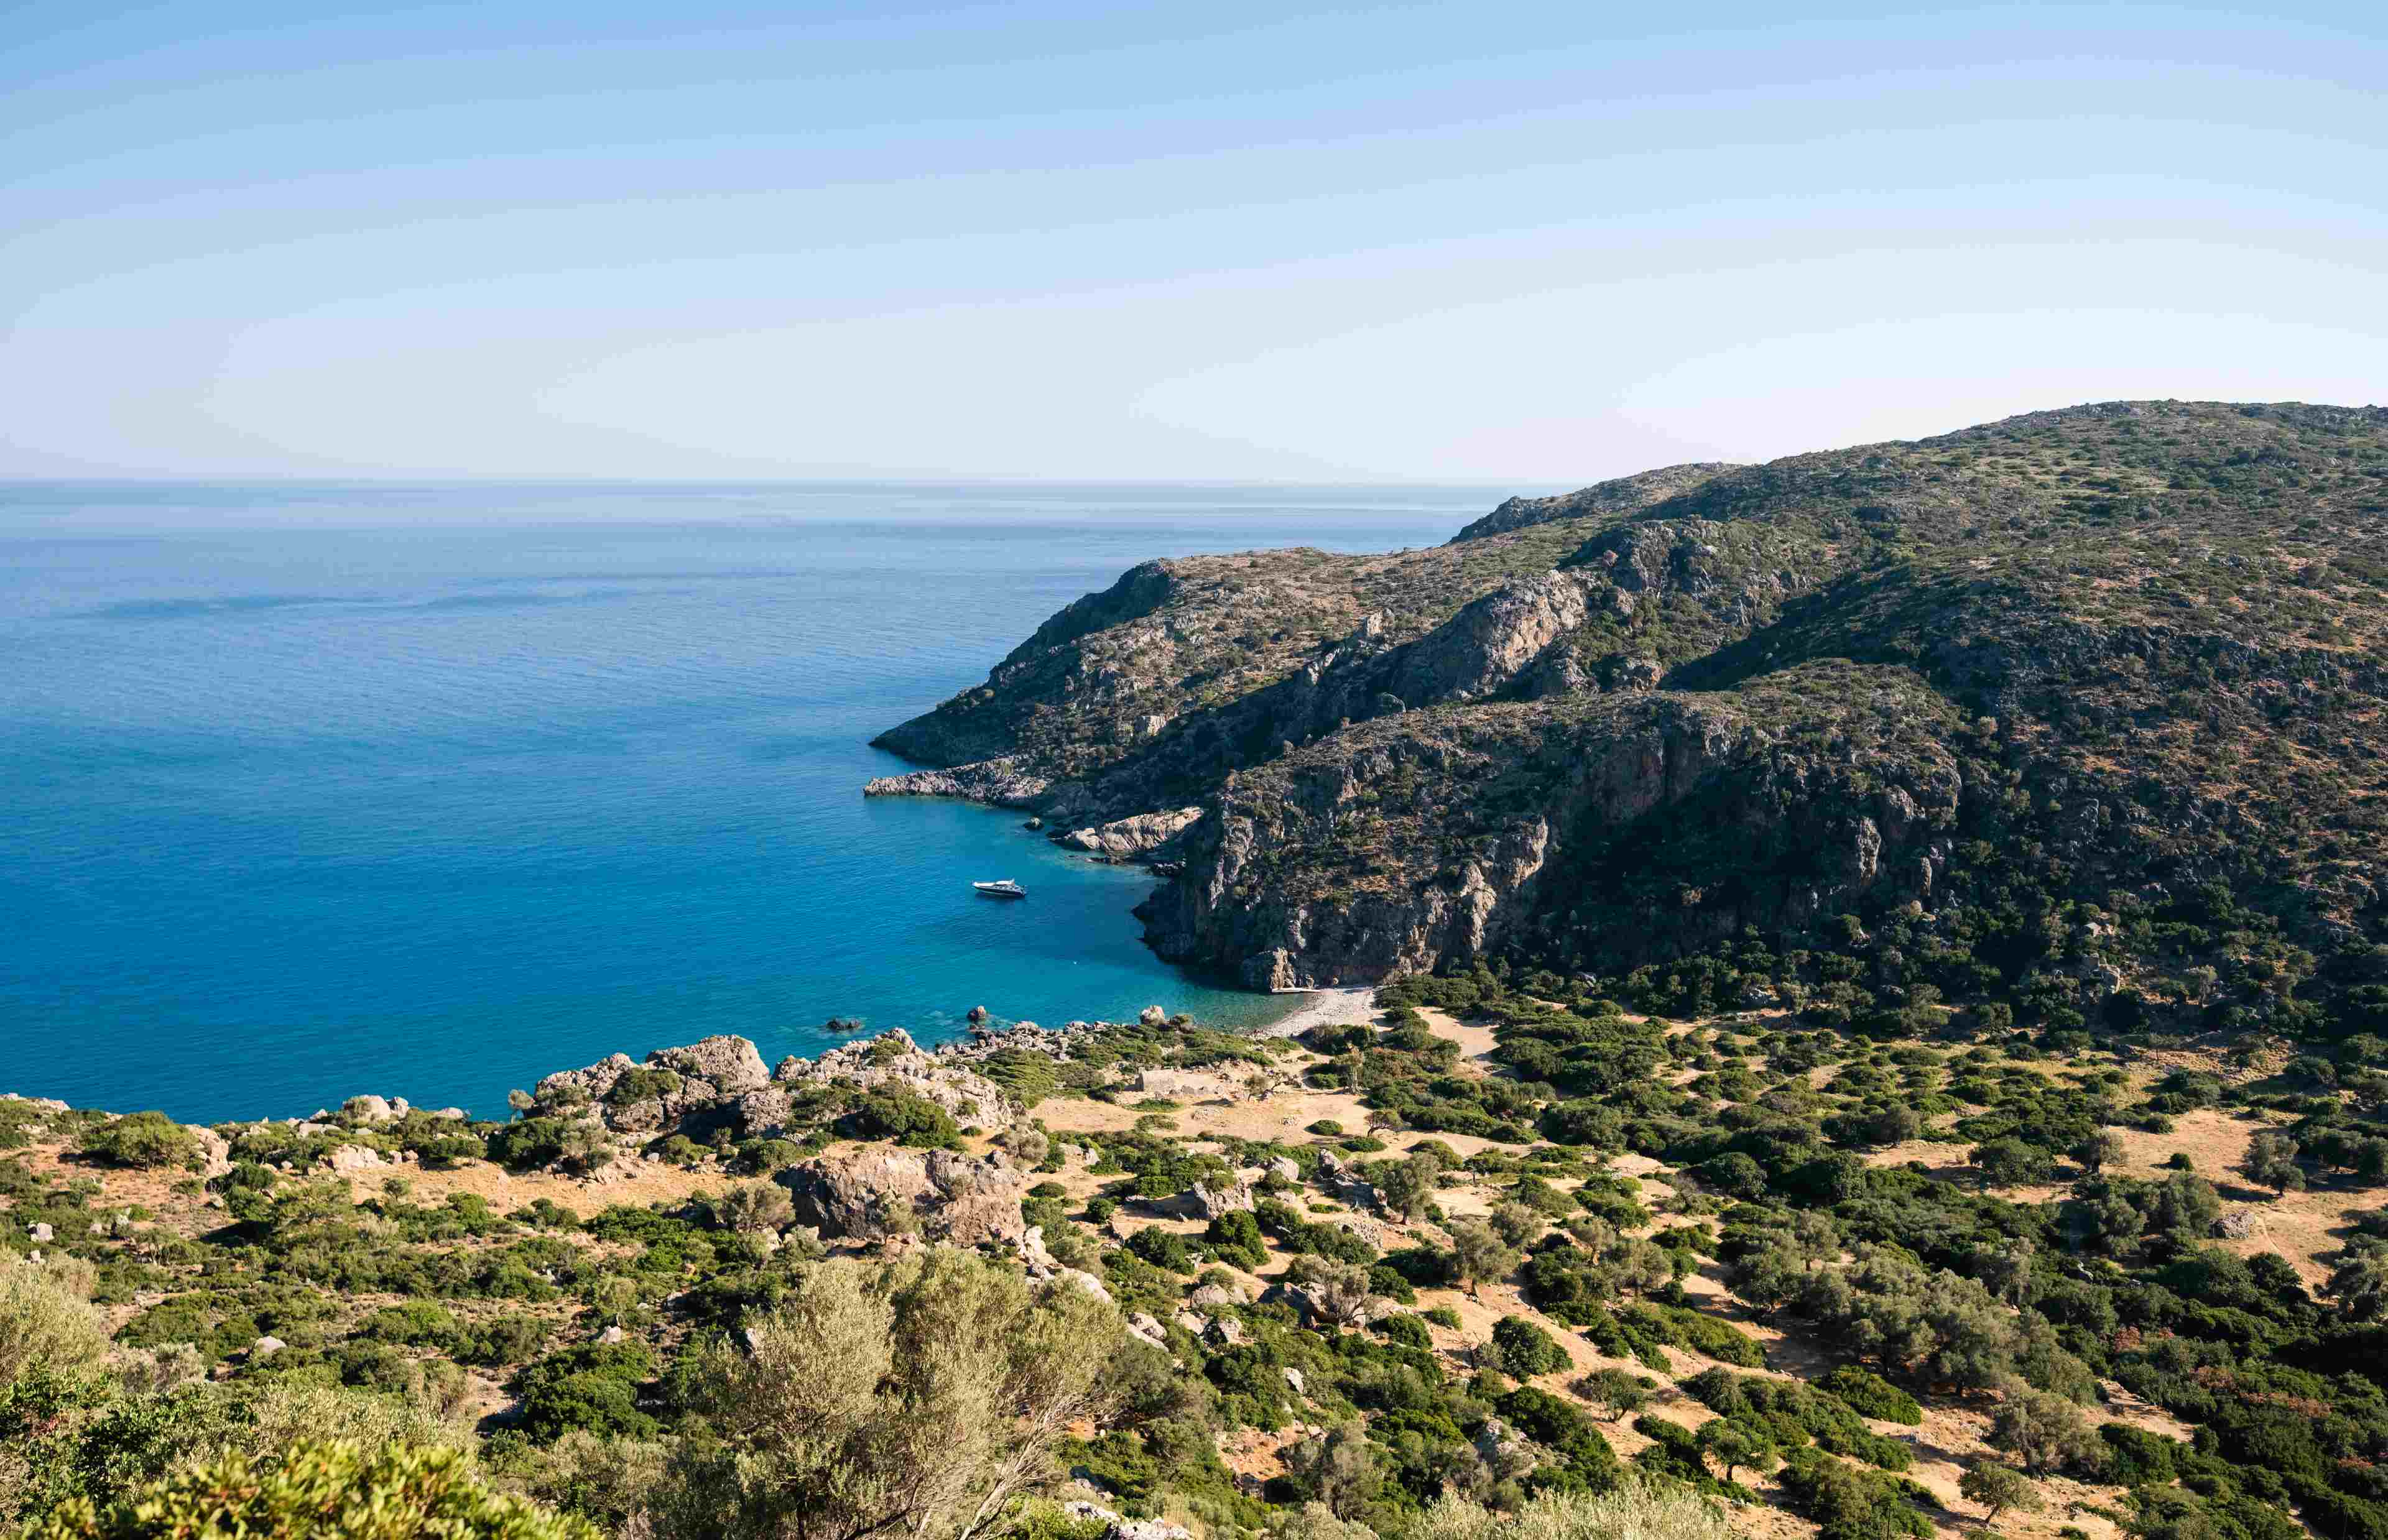 Crete's south coast, Kim Leuenberger